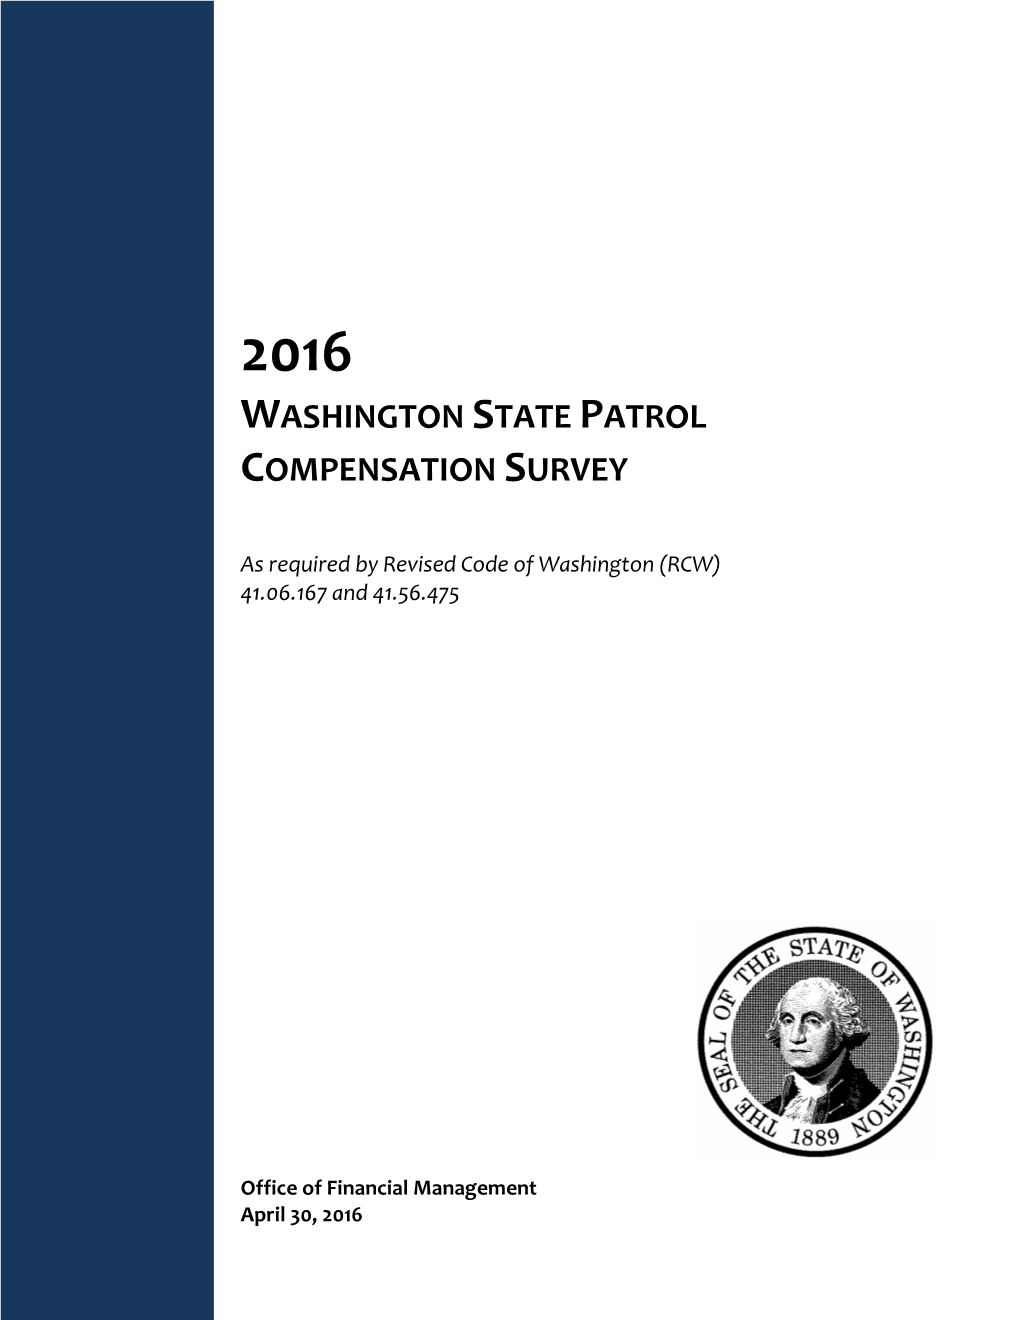 Washington State Patrol Compensation Survey